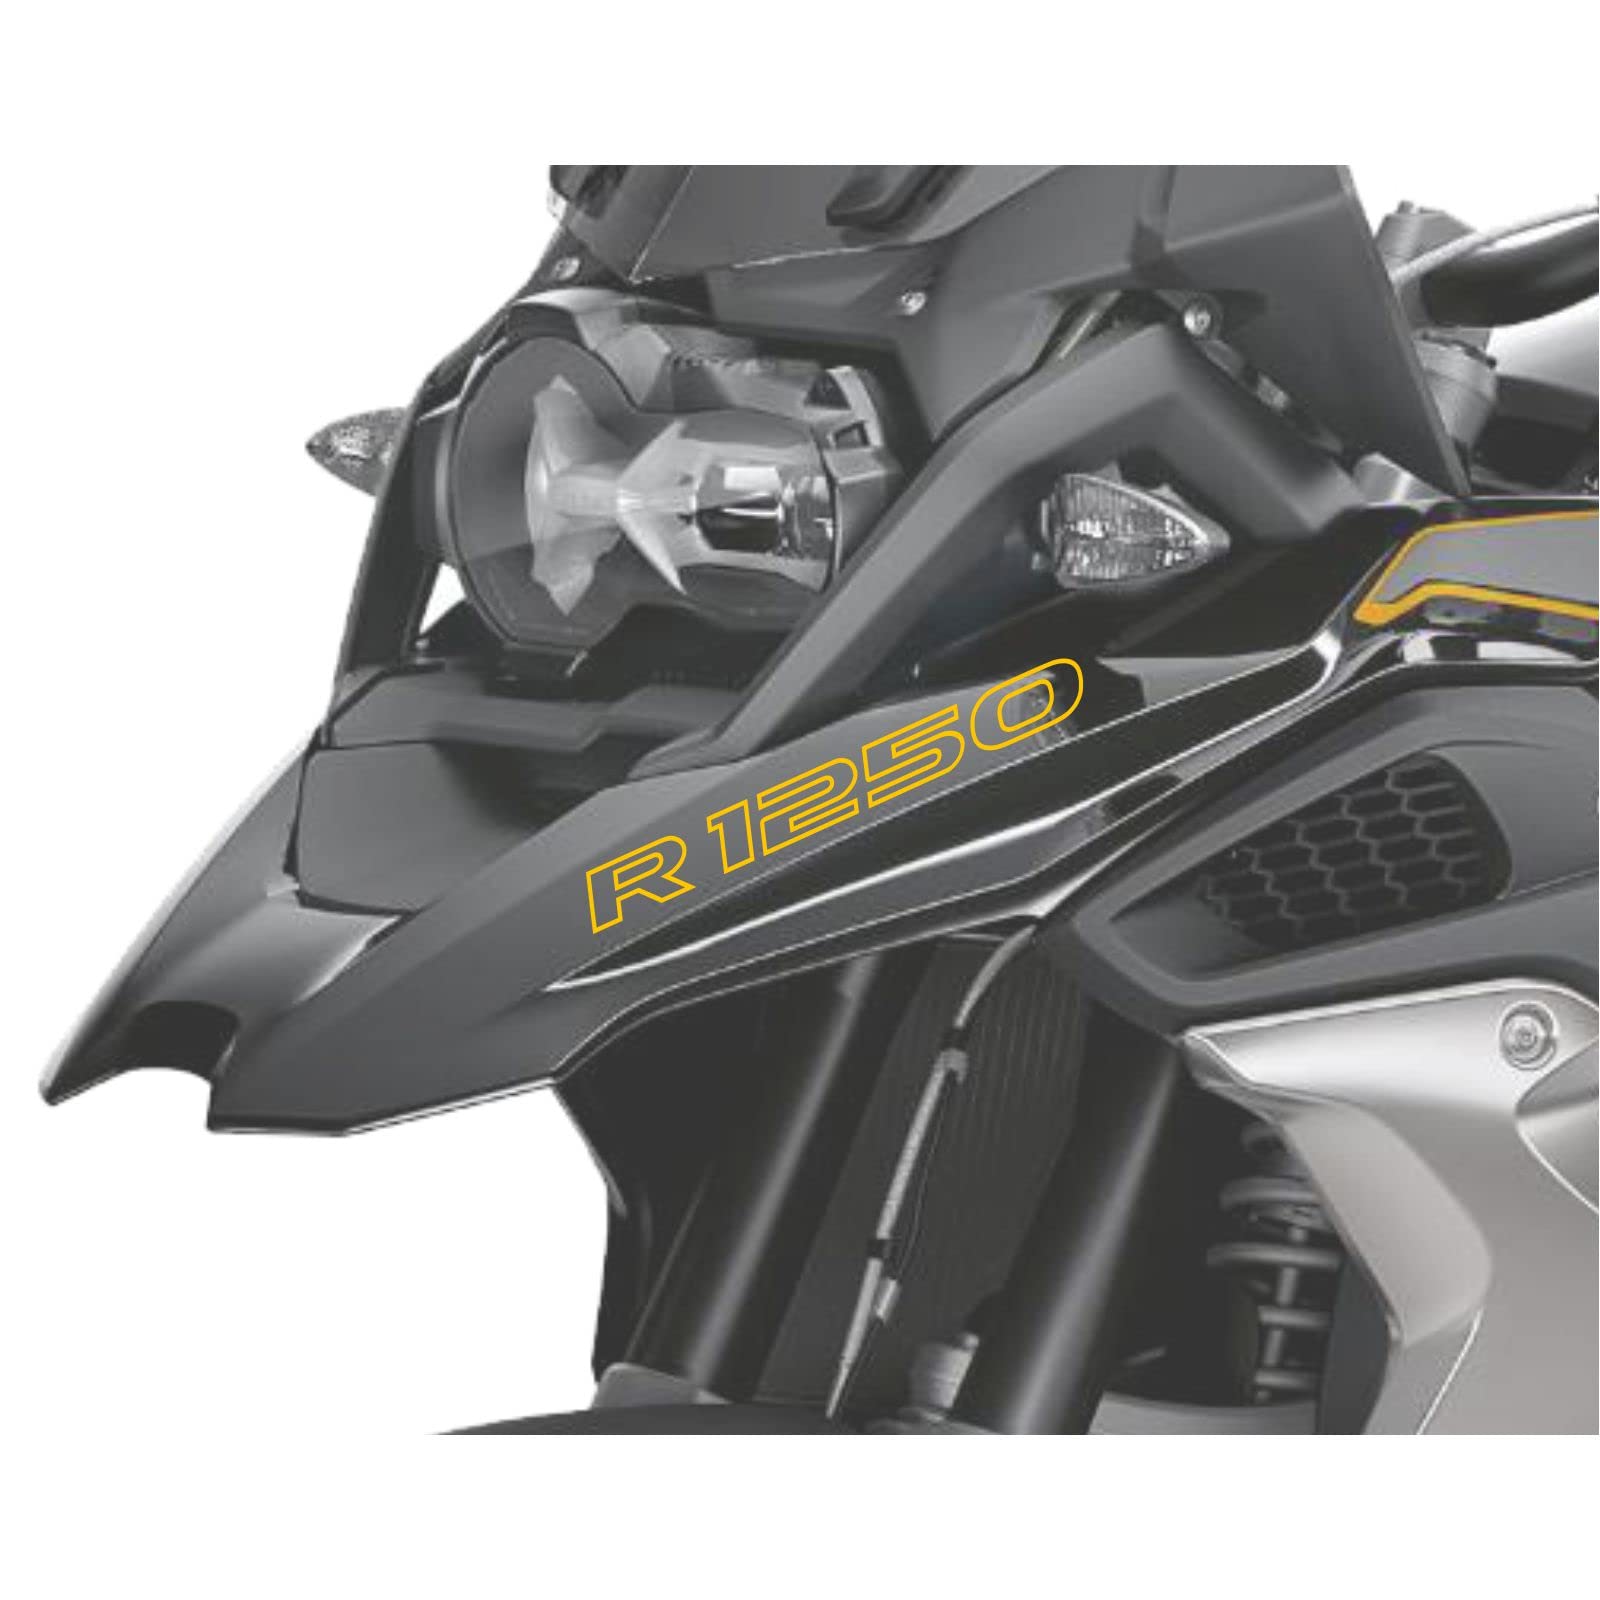 Black Doves Graphics 2pcs Aufkleber R1250 kompatibel für Motorrad BMW R1250 GS R 1250 HP Adventure (Yellow) von Black Doves Graphics